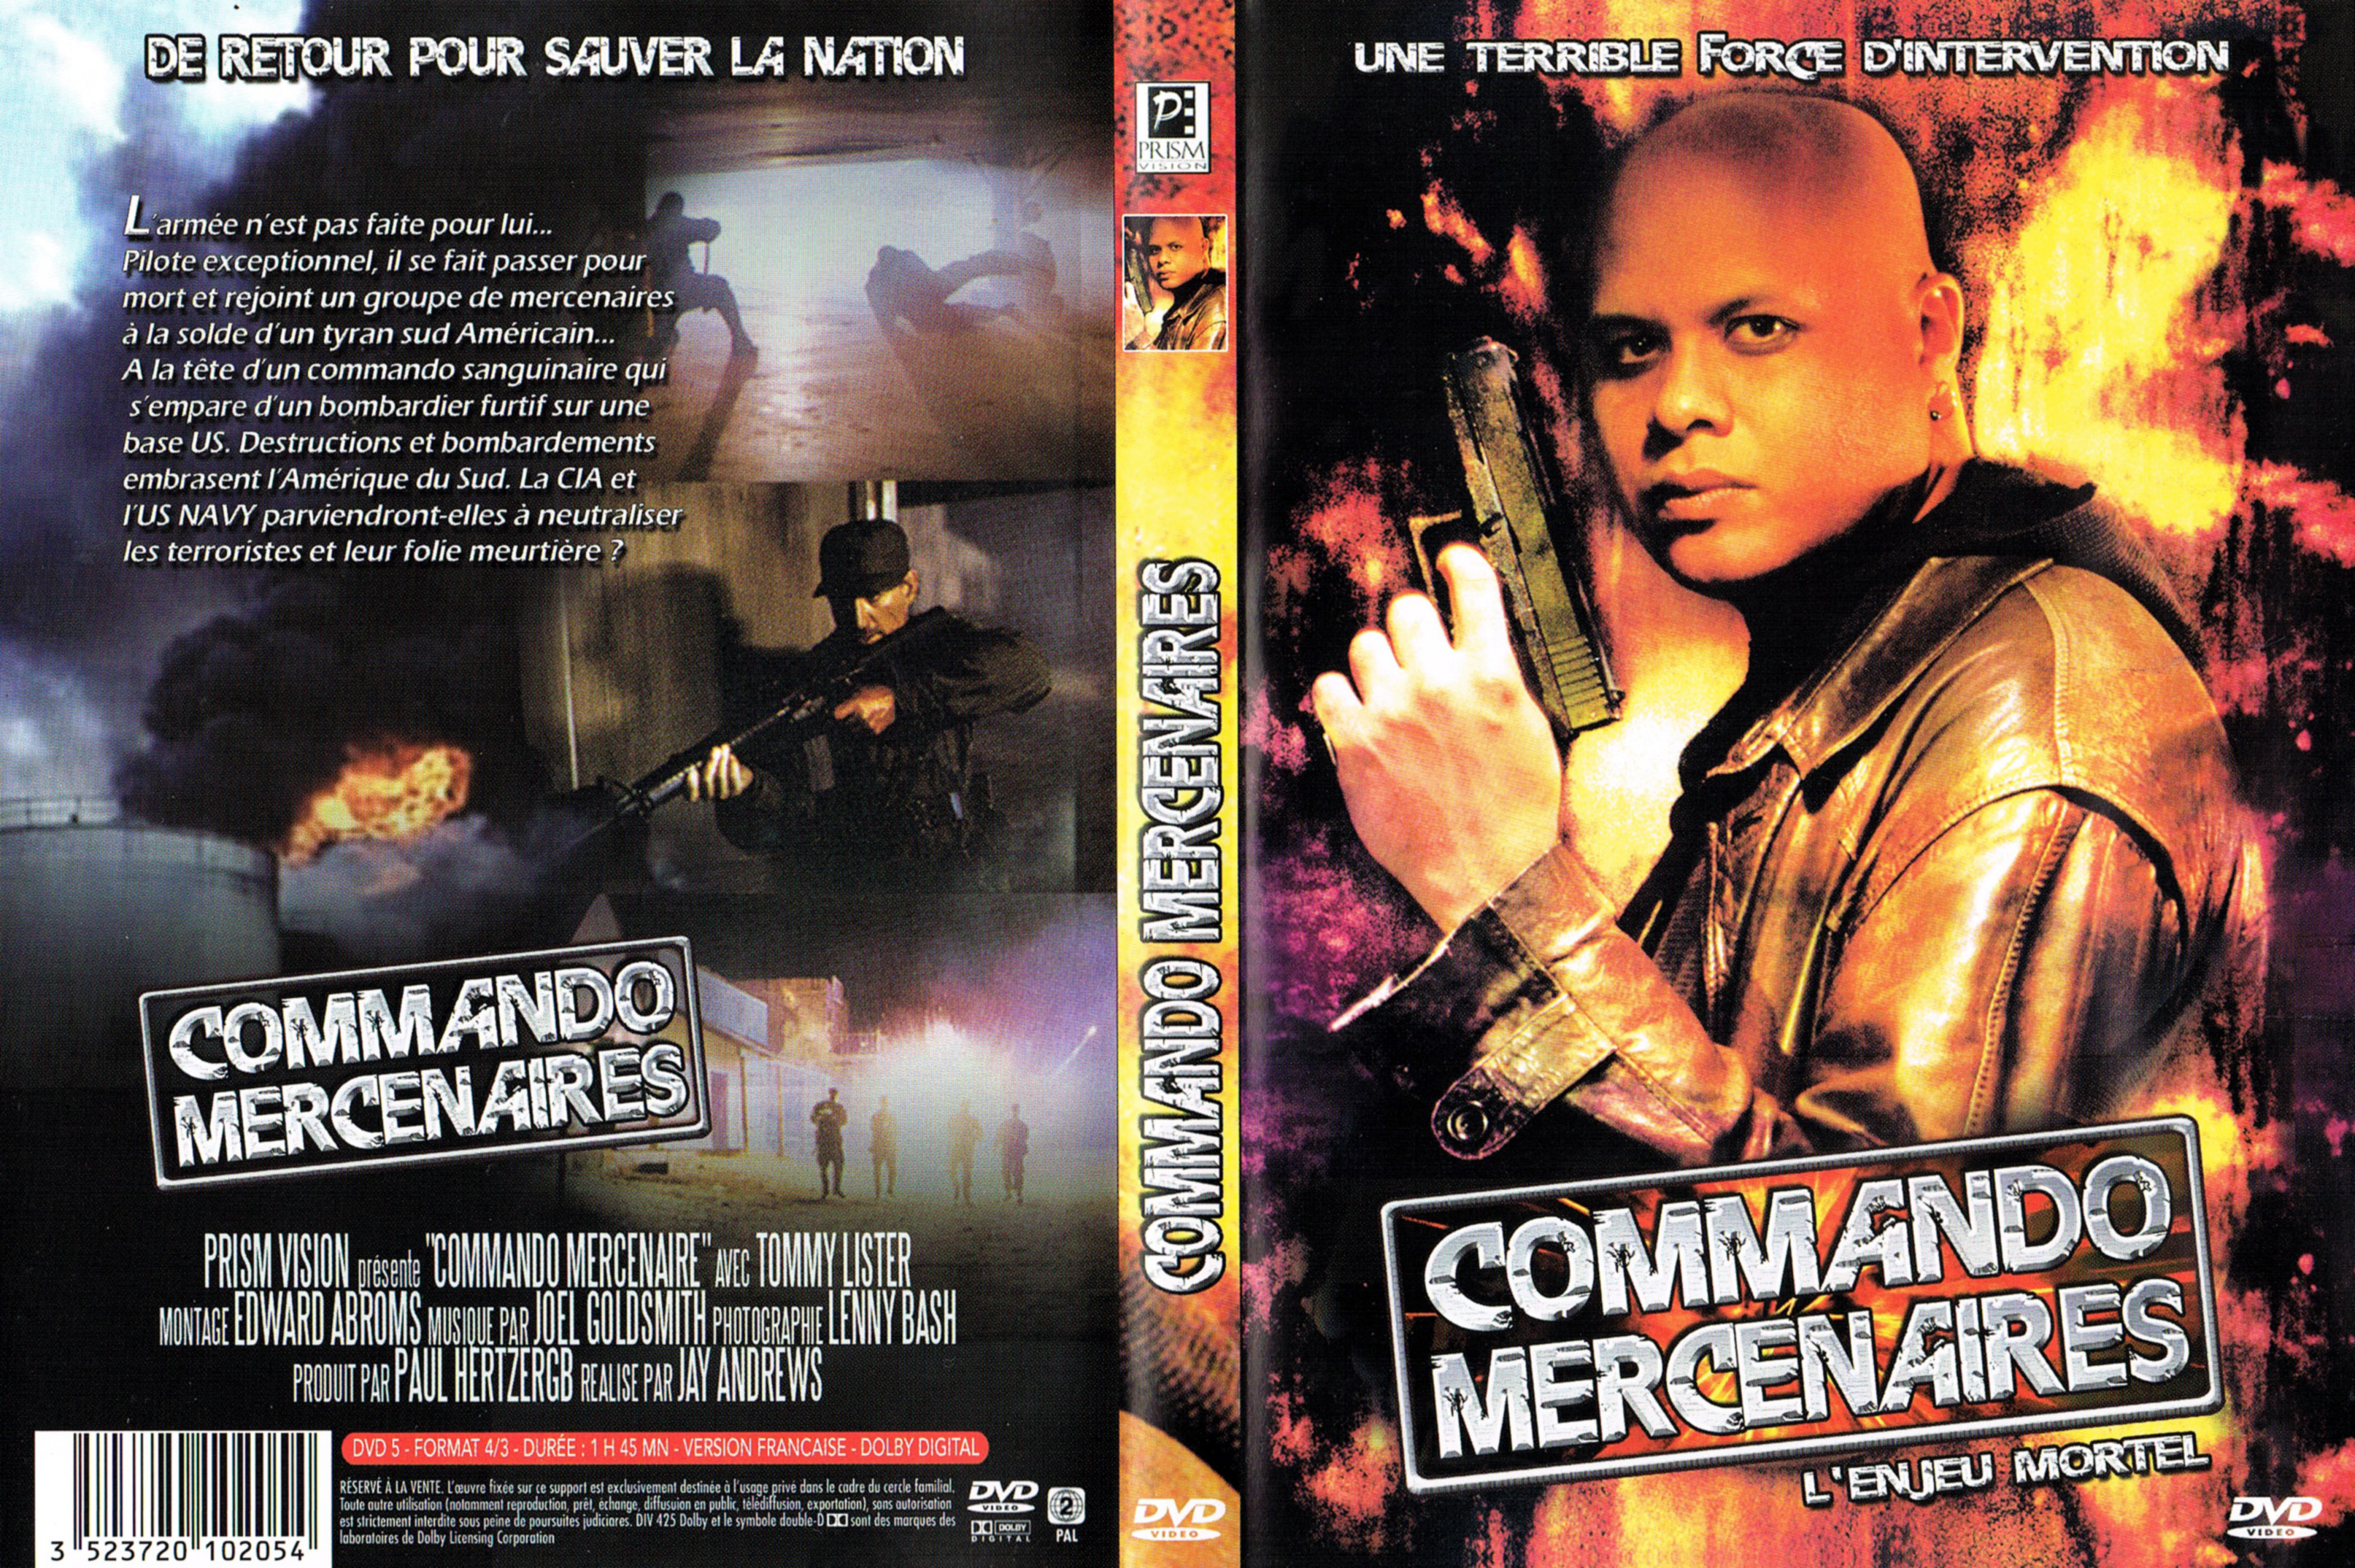 Jaquette DVD Commando mercenaires